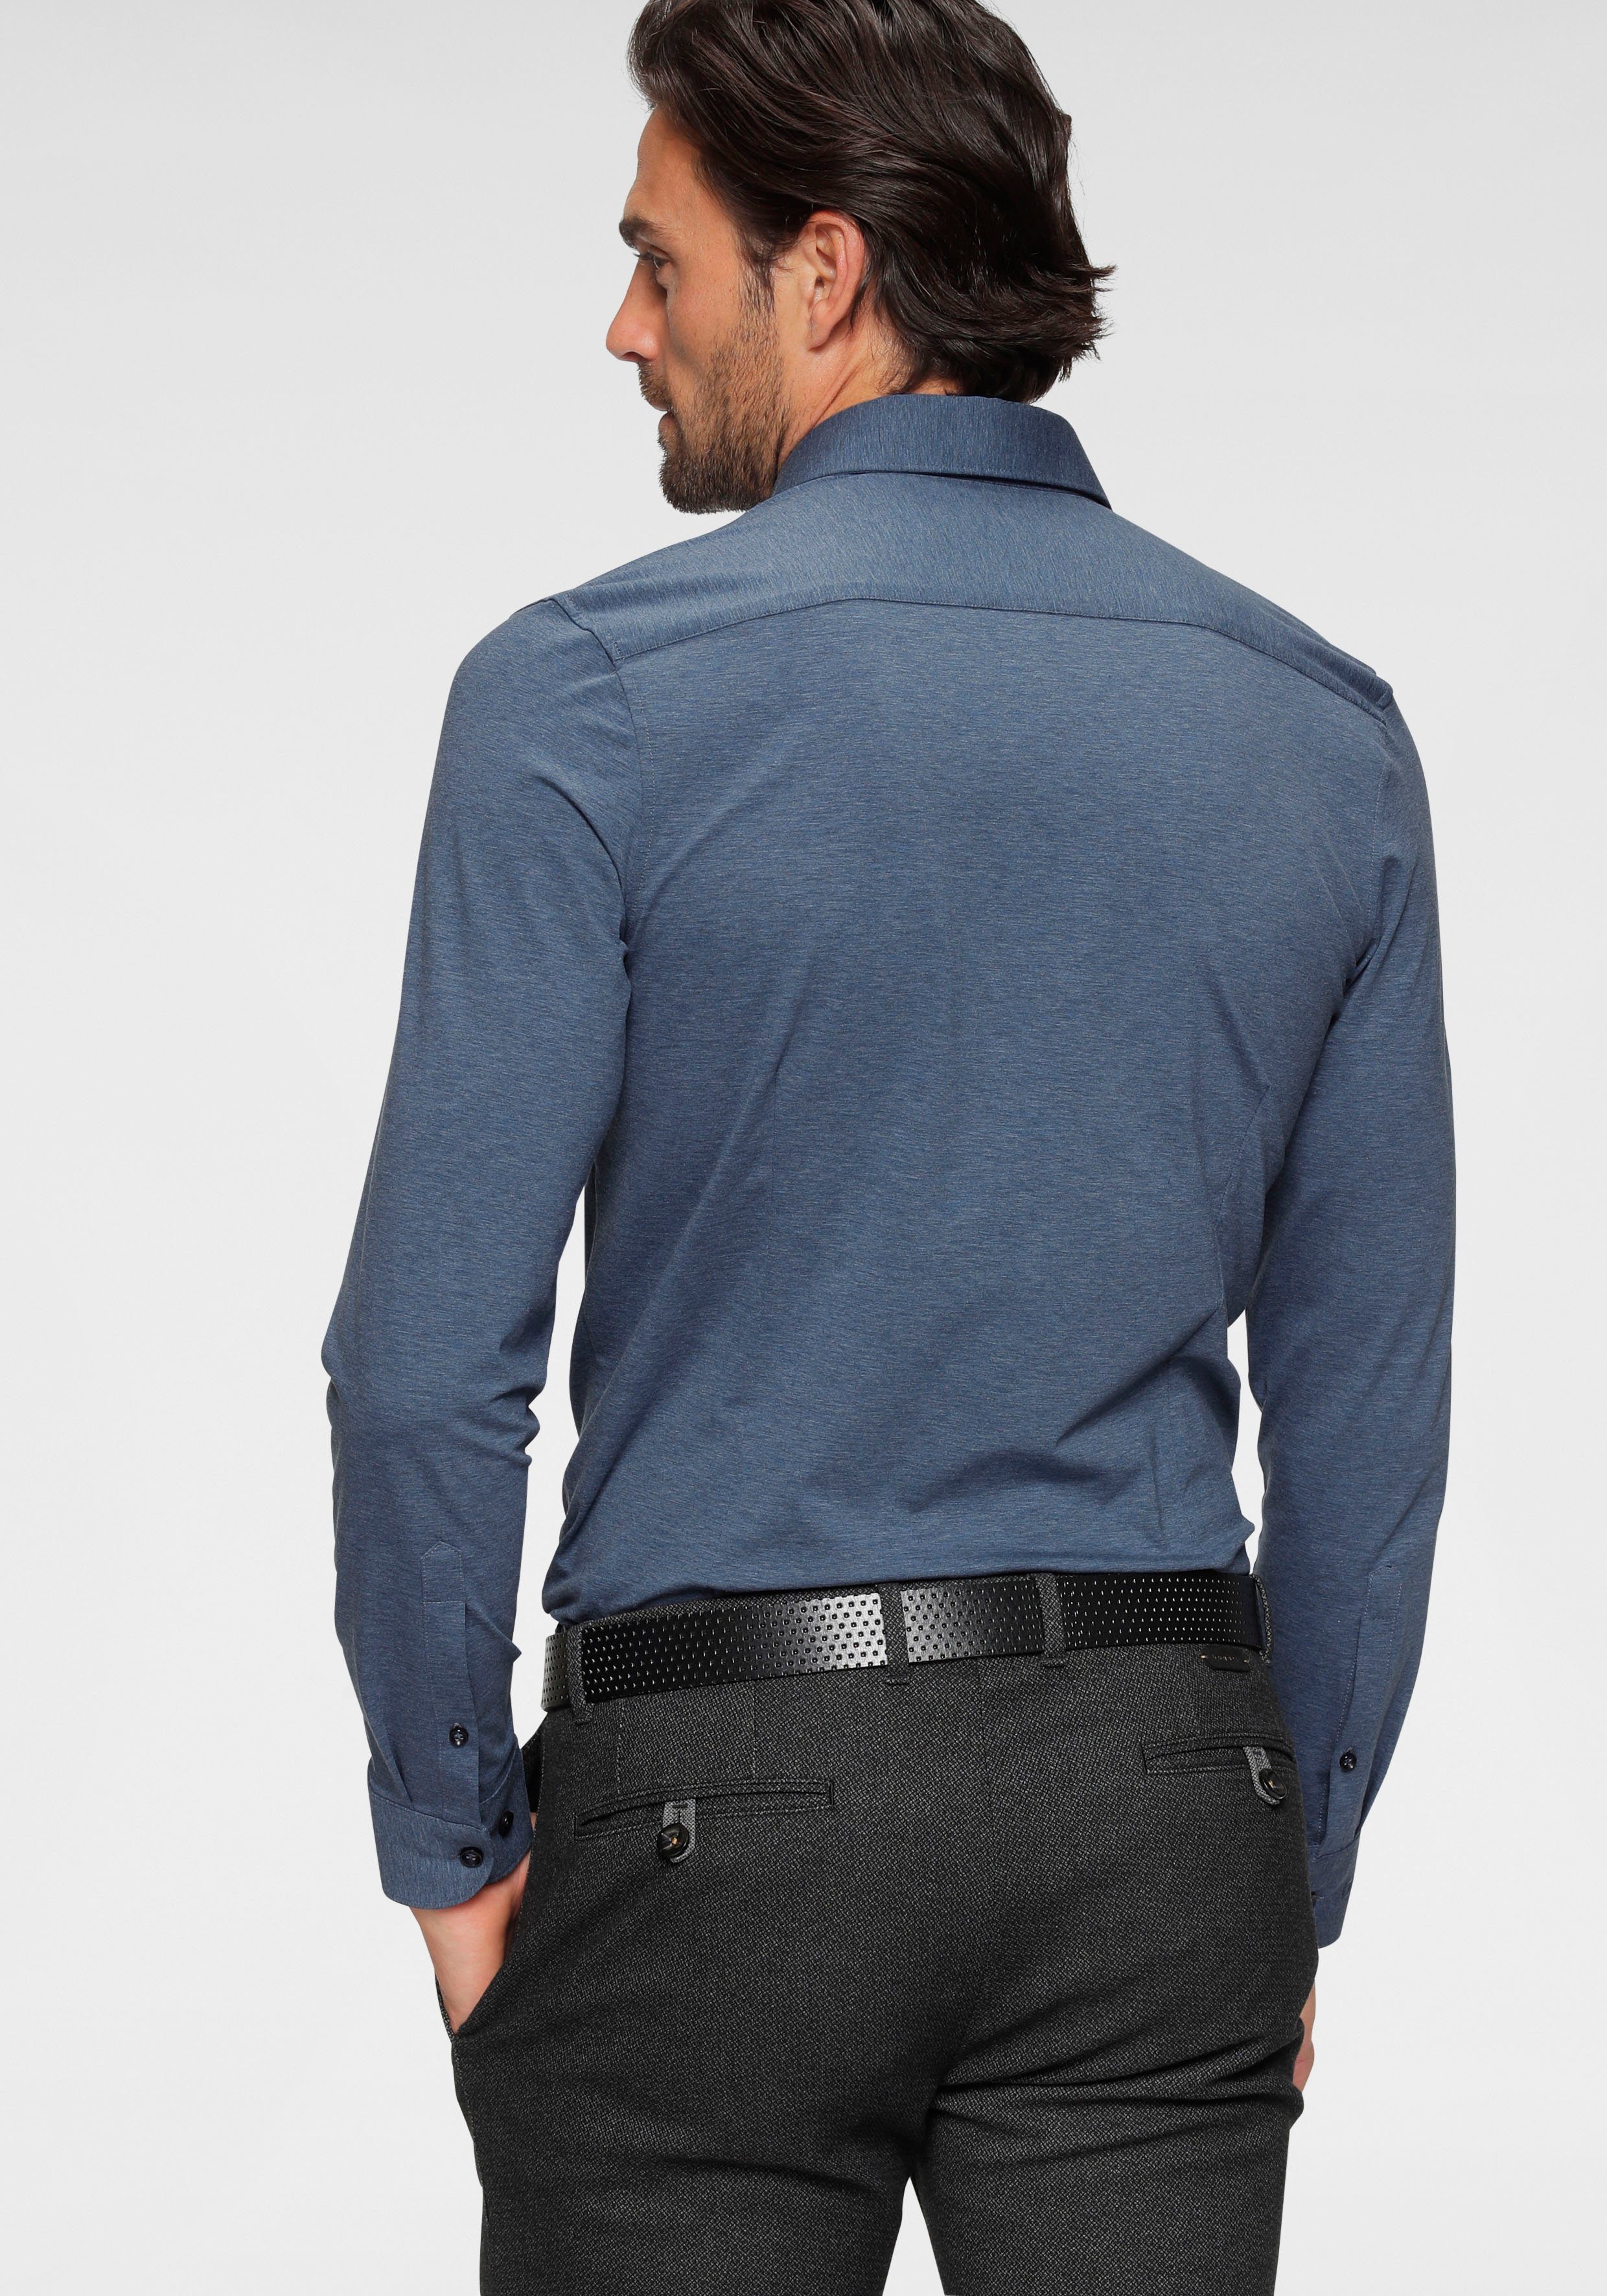 OLYMP Businesshemd rauchblau body Jersey Qualität fit in Five Level